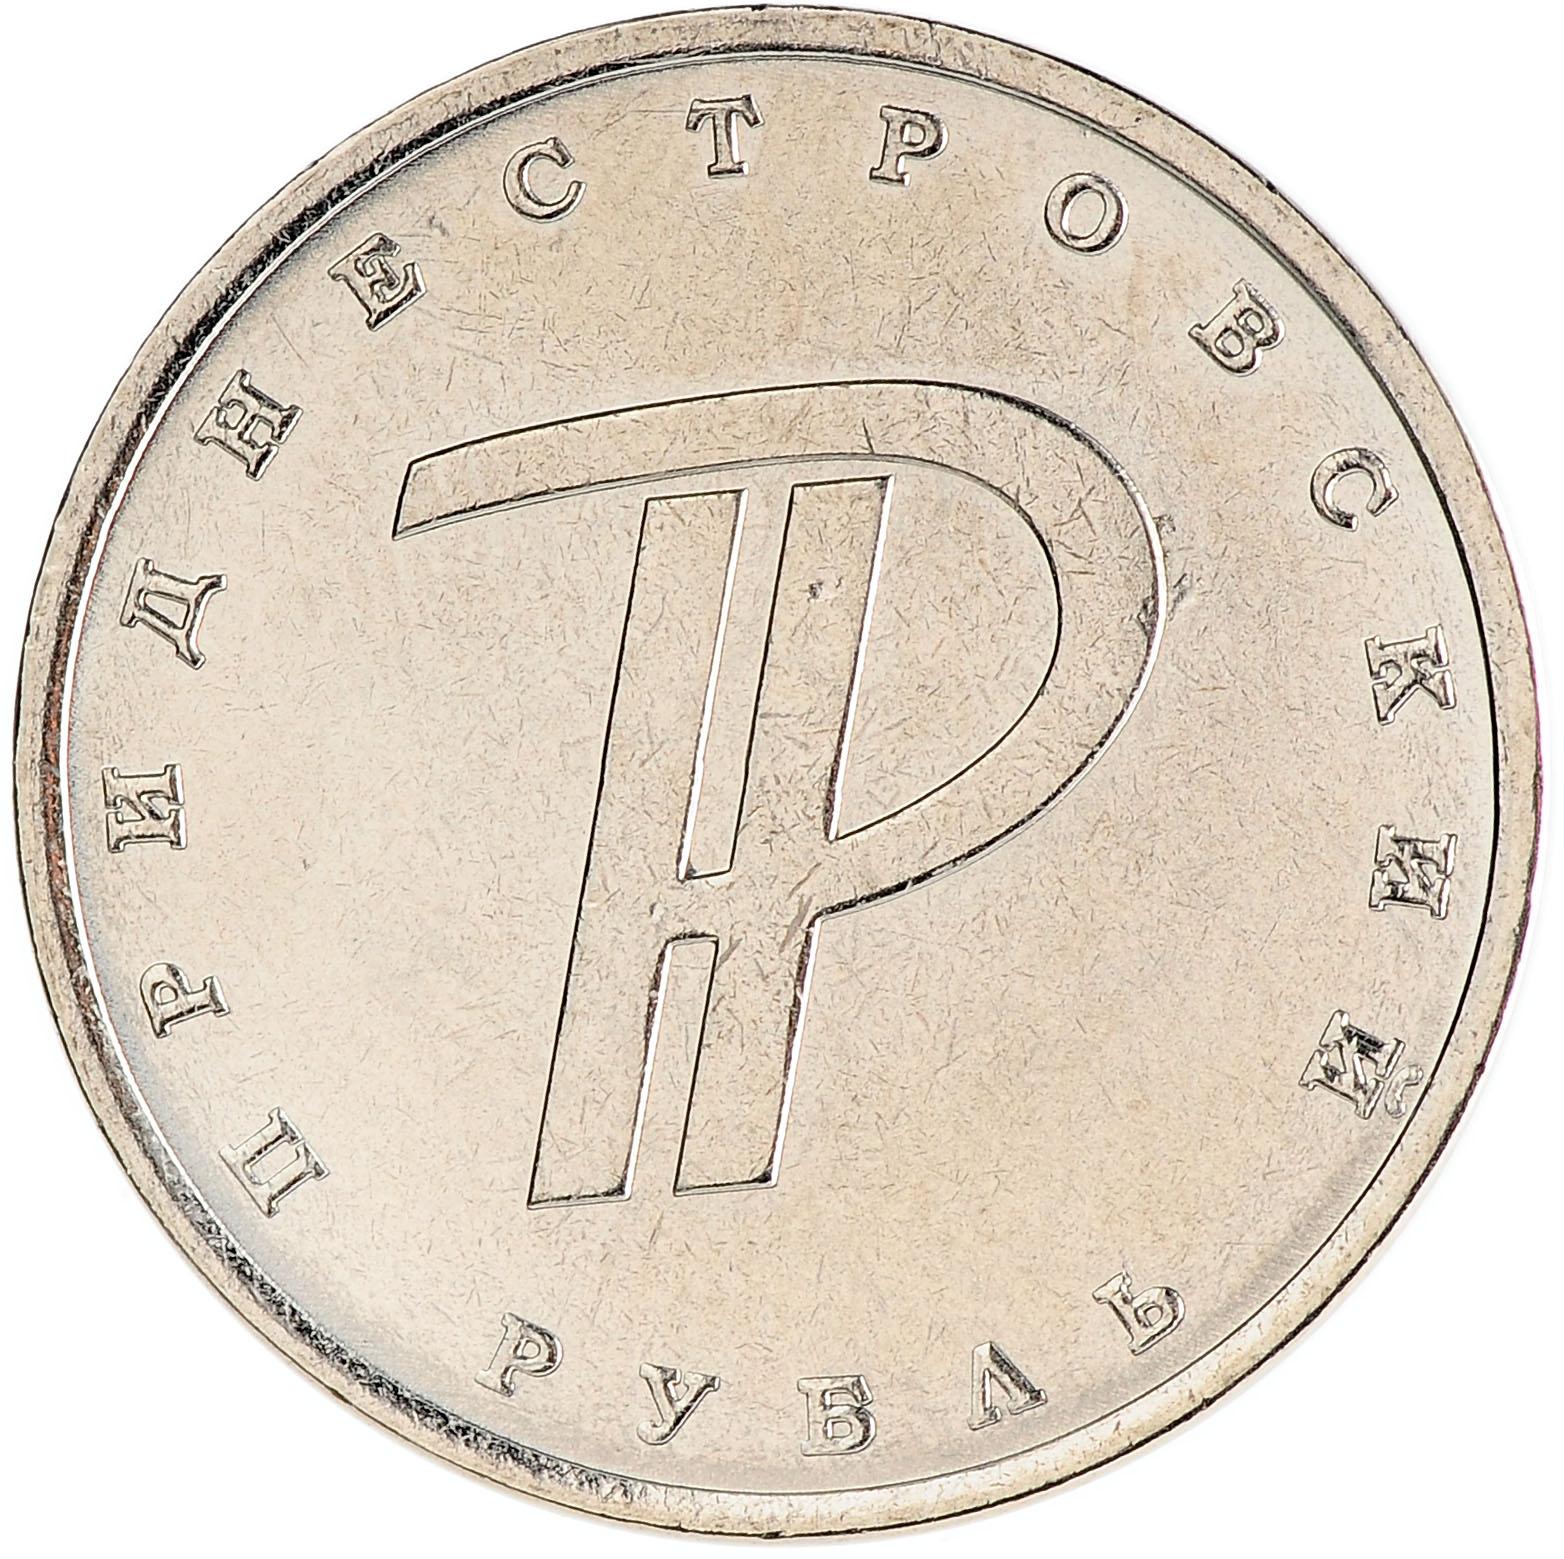 Монета знак рубля. Монета 1 рубль 2015. Приднестровье 1 рубль 2015. Приднестровский рубль символ.